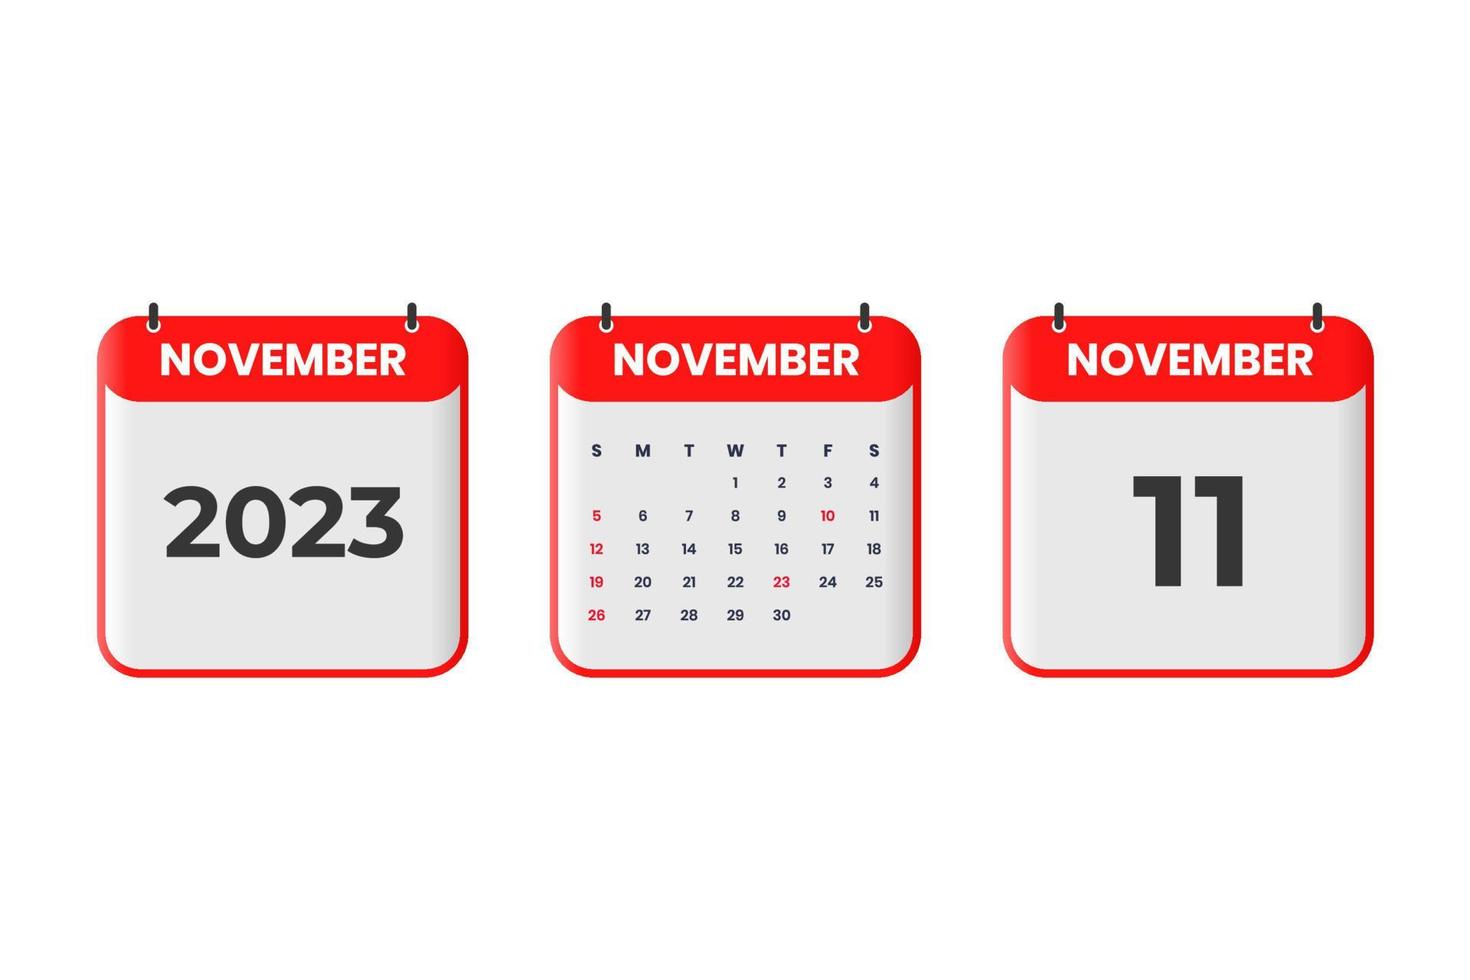 novembre 2023 calendario design. 11 ° novembre 2023 calendario icona per orario, appuntamento, importante Data concetto vettore